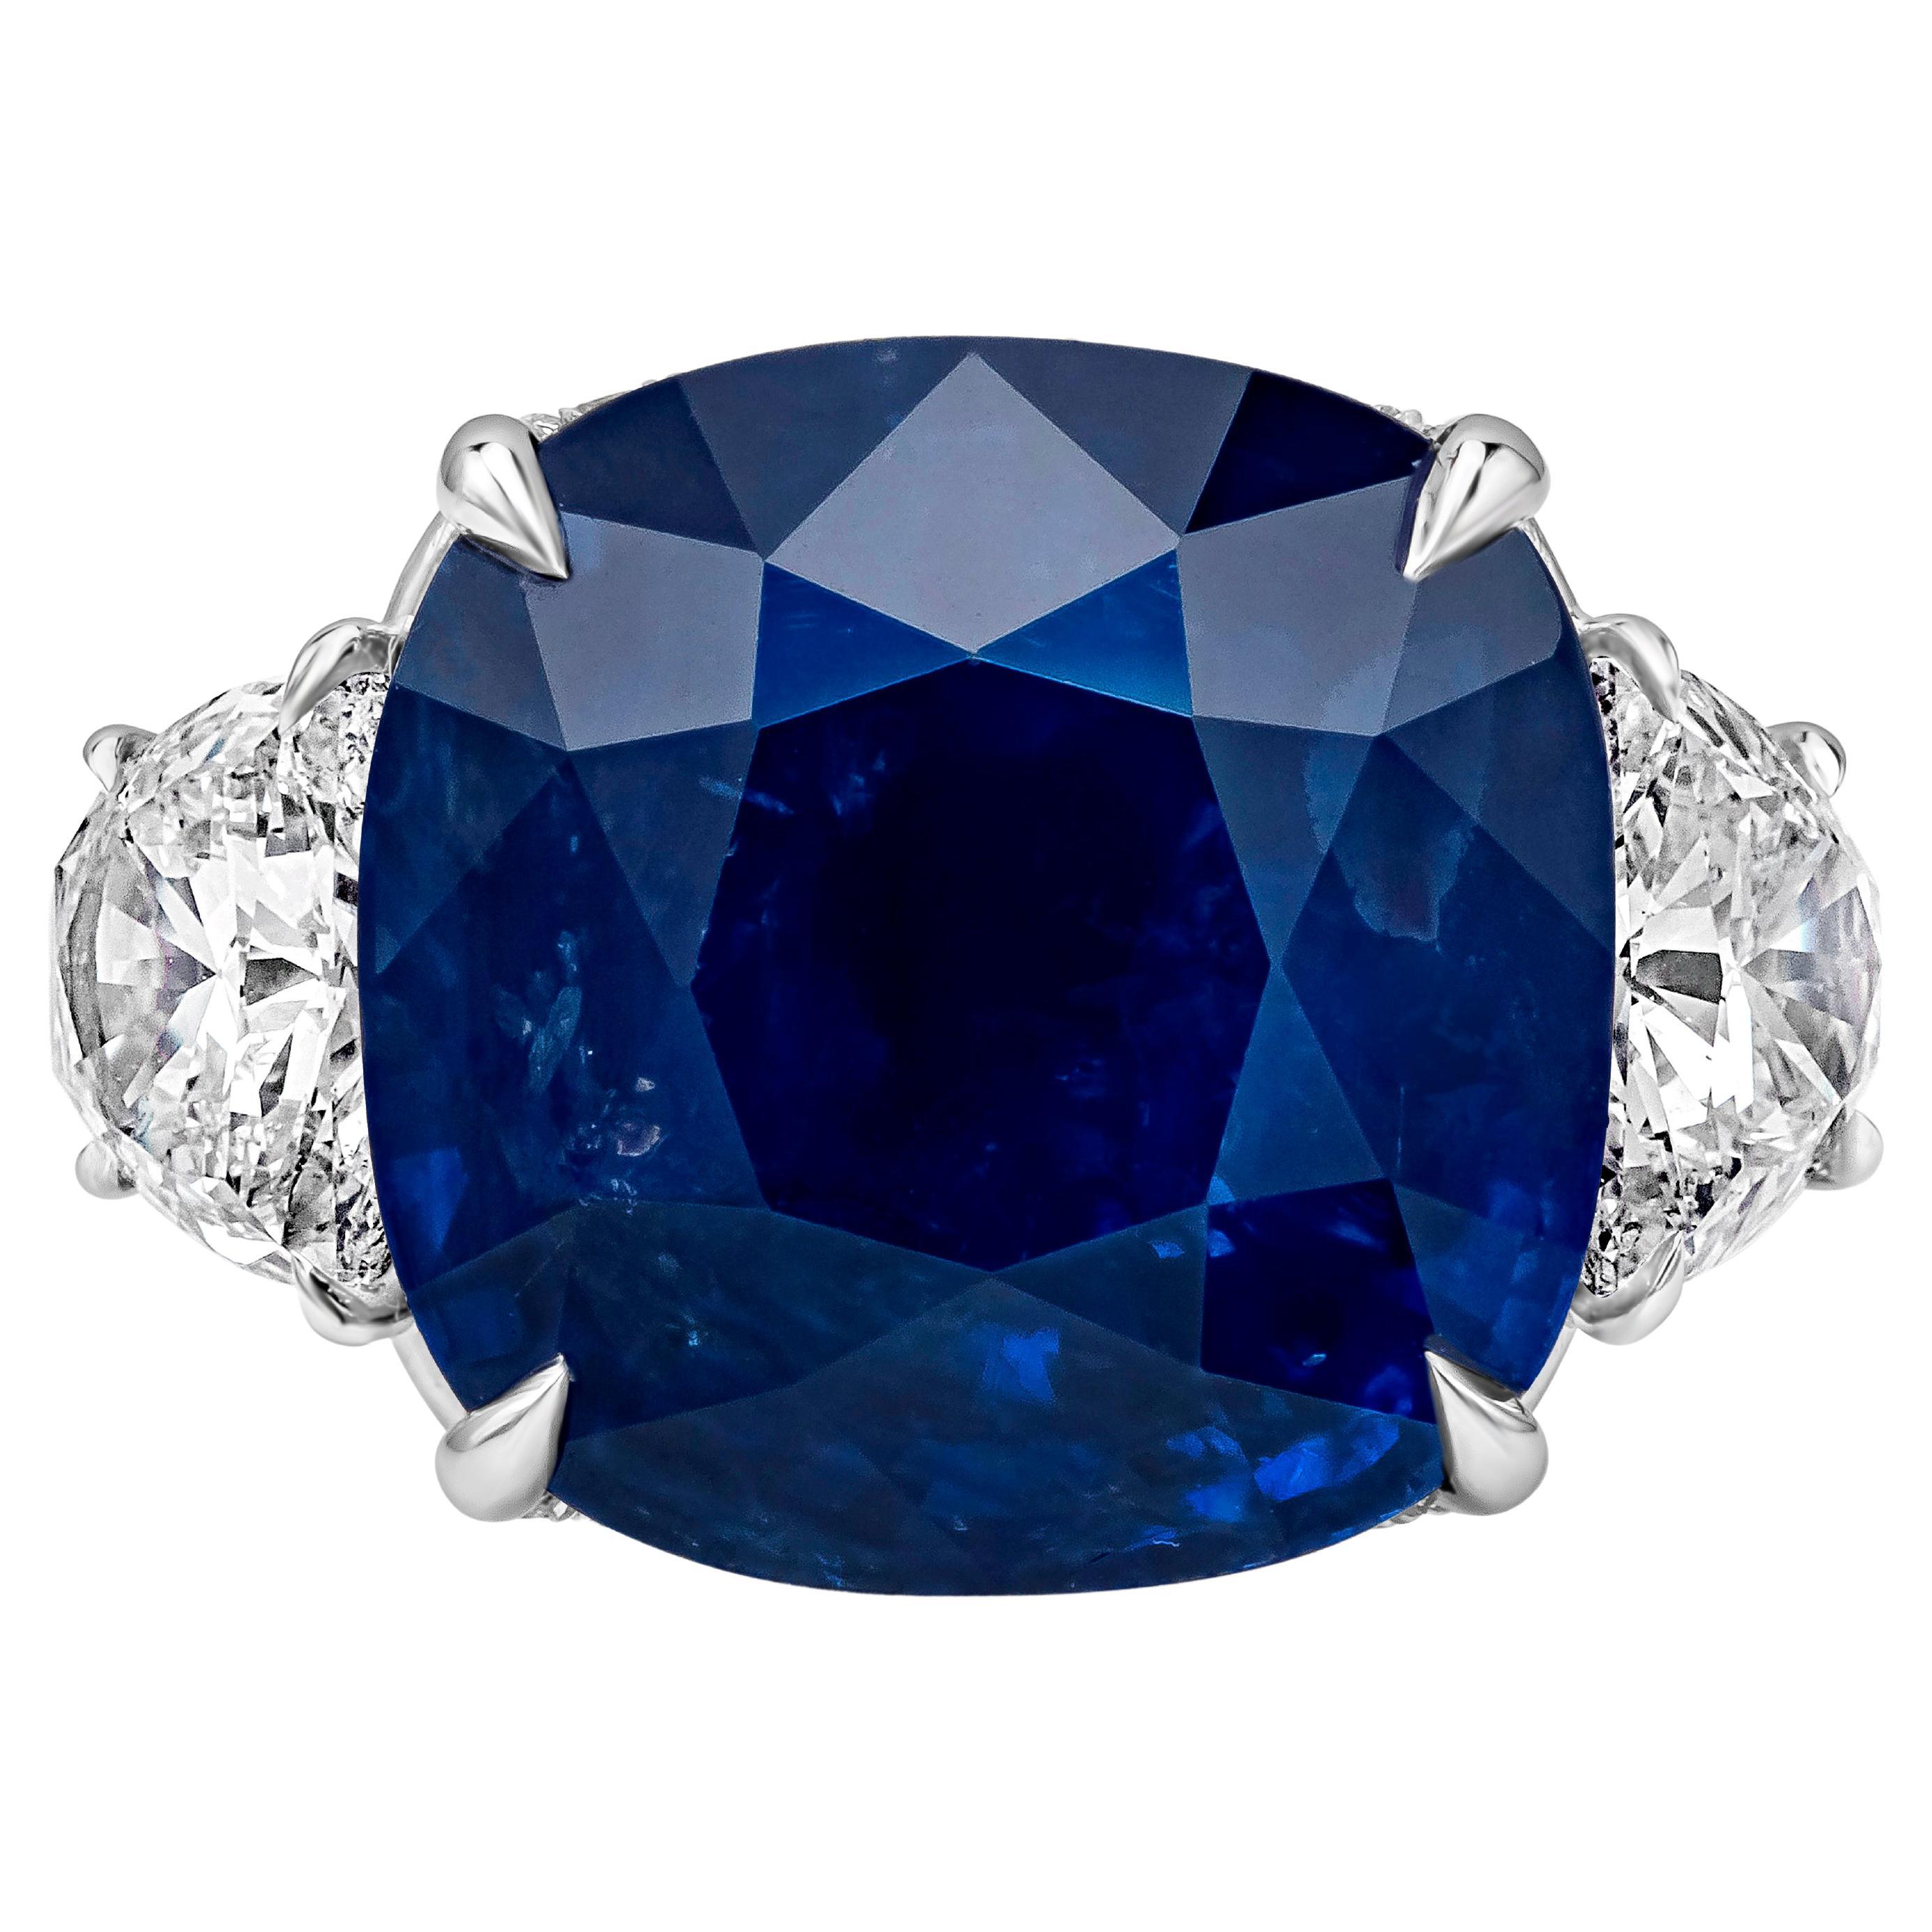 15.68 Carat Cushion Cut Ceylon Intense Blue Sapphire Three-Stone Engagement Ring